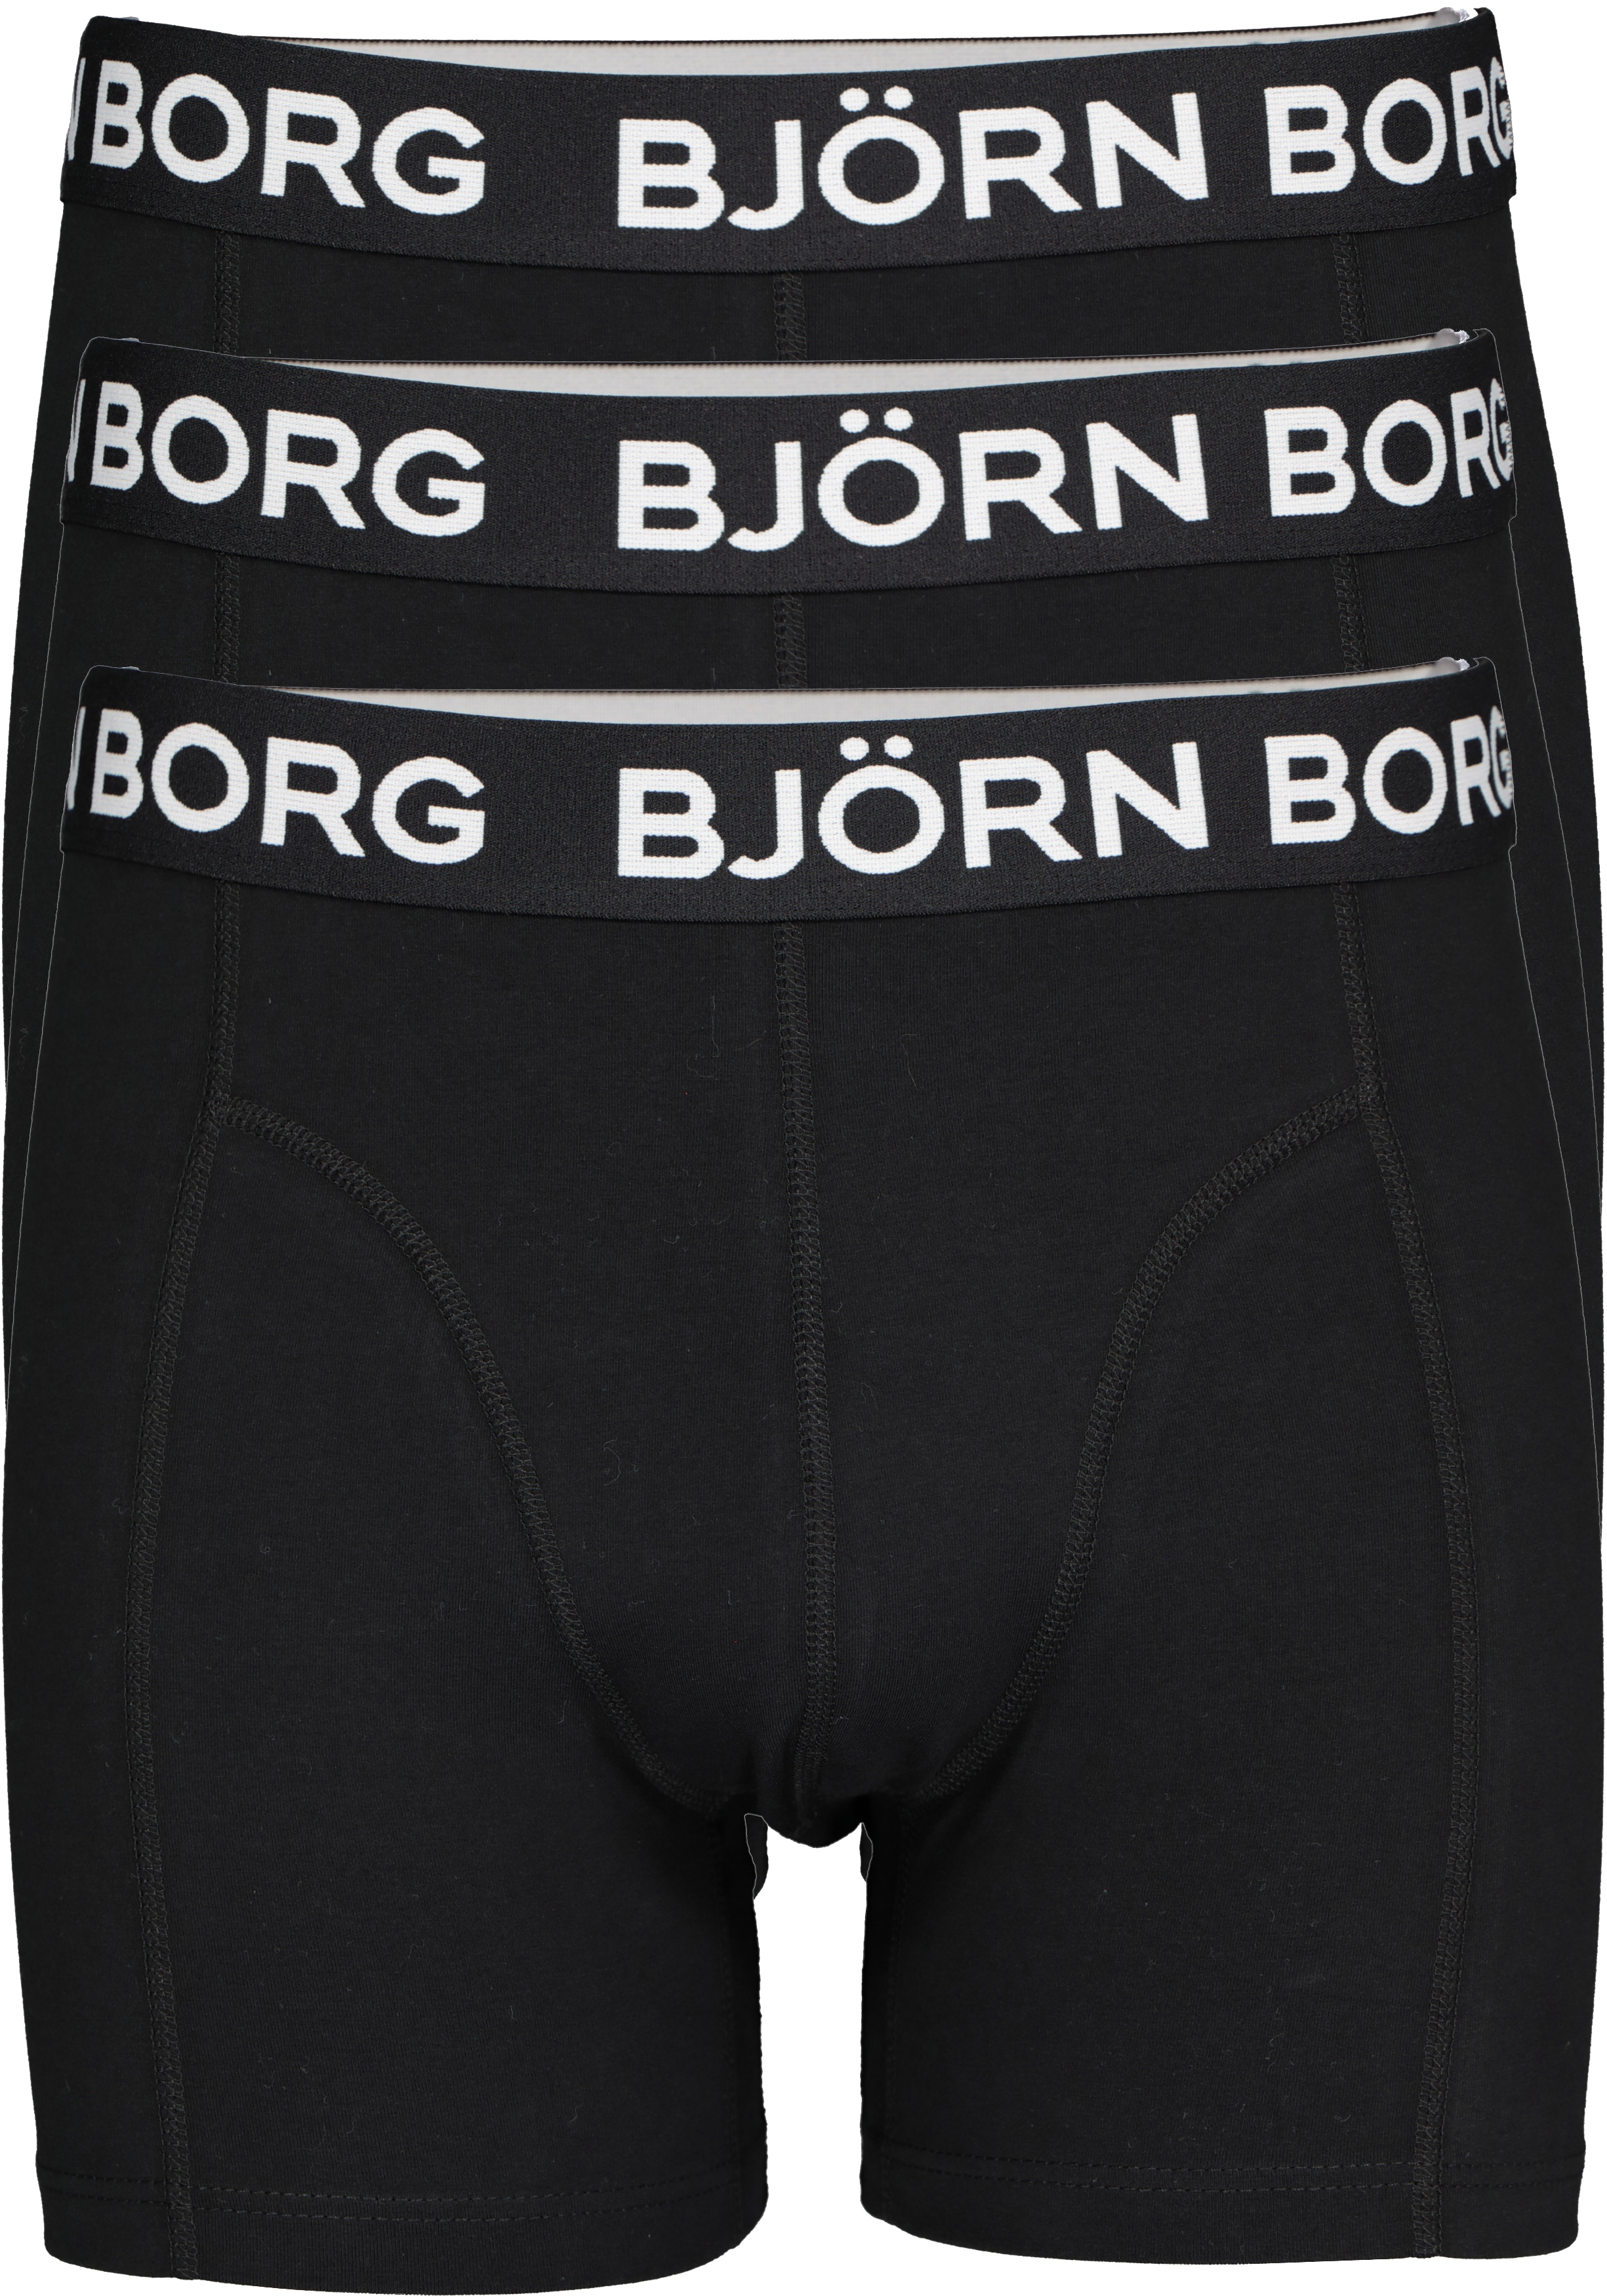 Bjorn Borg boxershorts Core (3-pack), heren boxers normale lengte, zwart